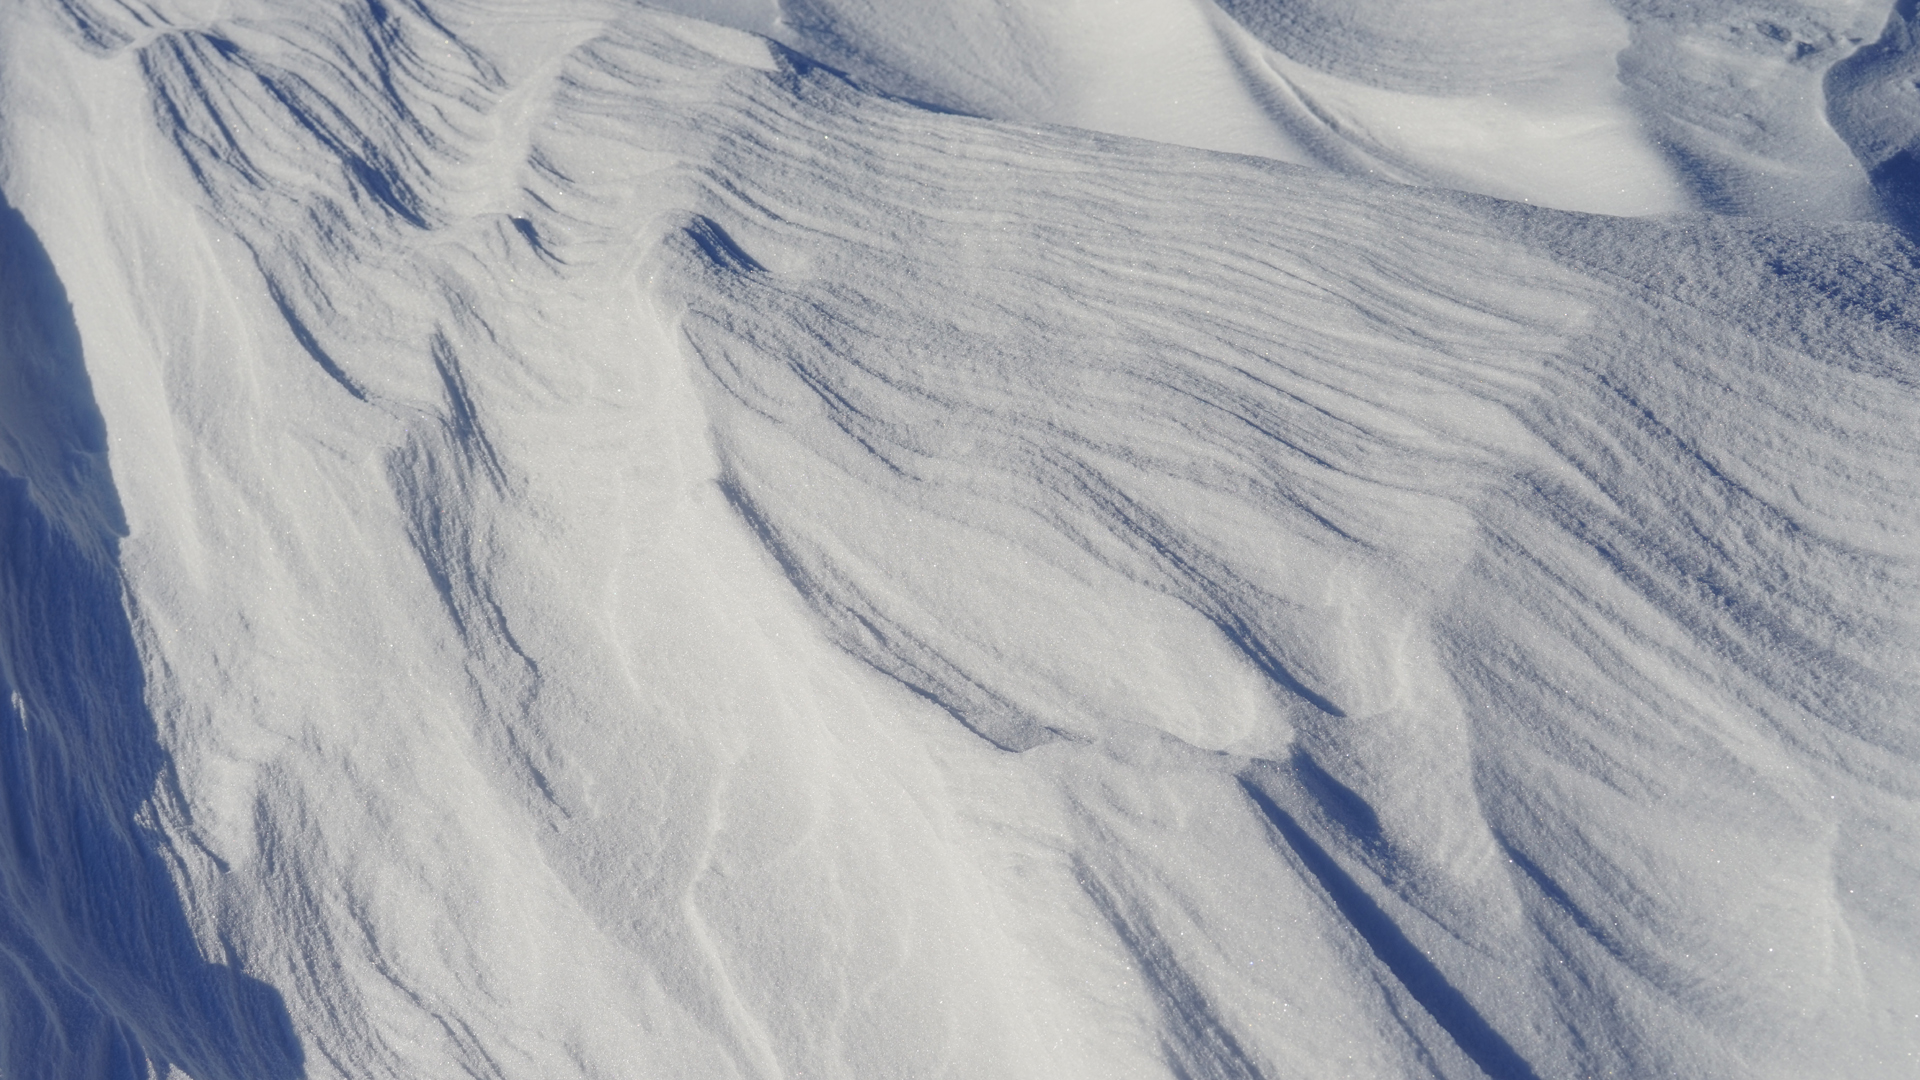 Fotostrecke Schnee Abbildung 27: Windkraft mit Kunstsinn II